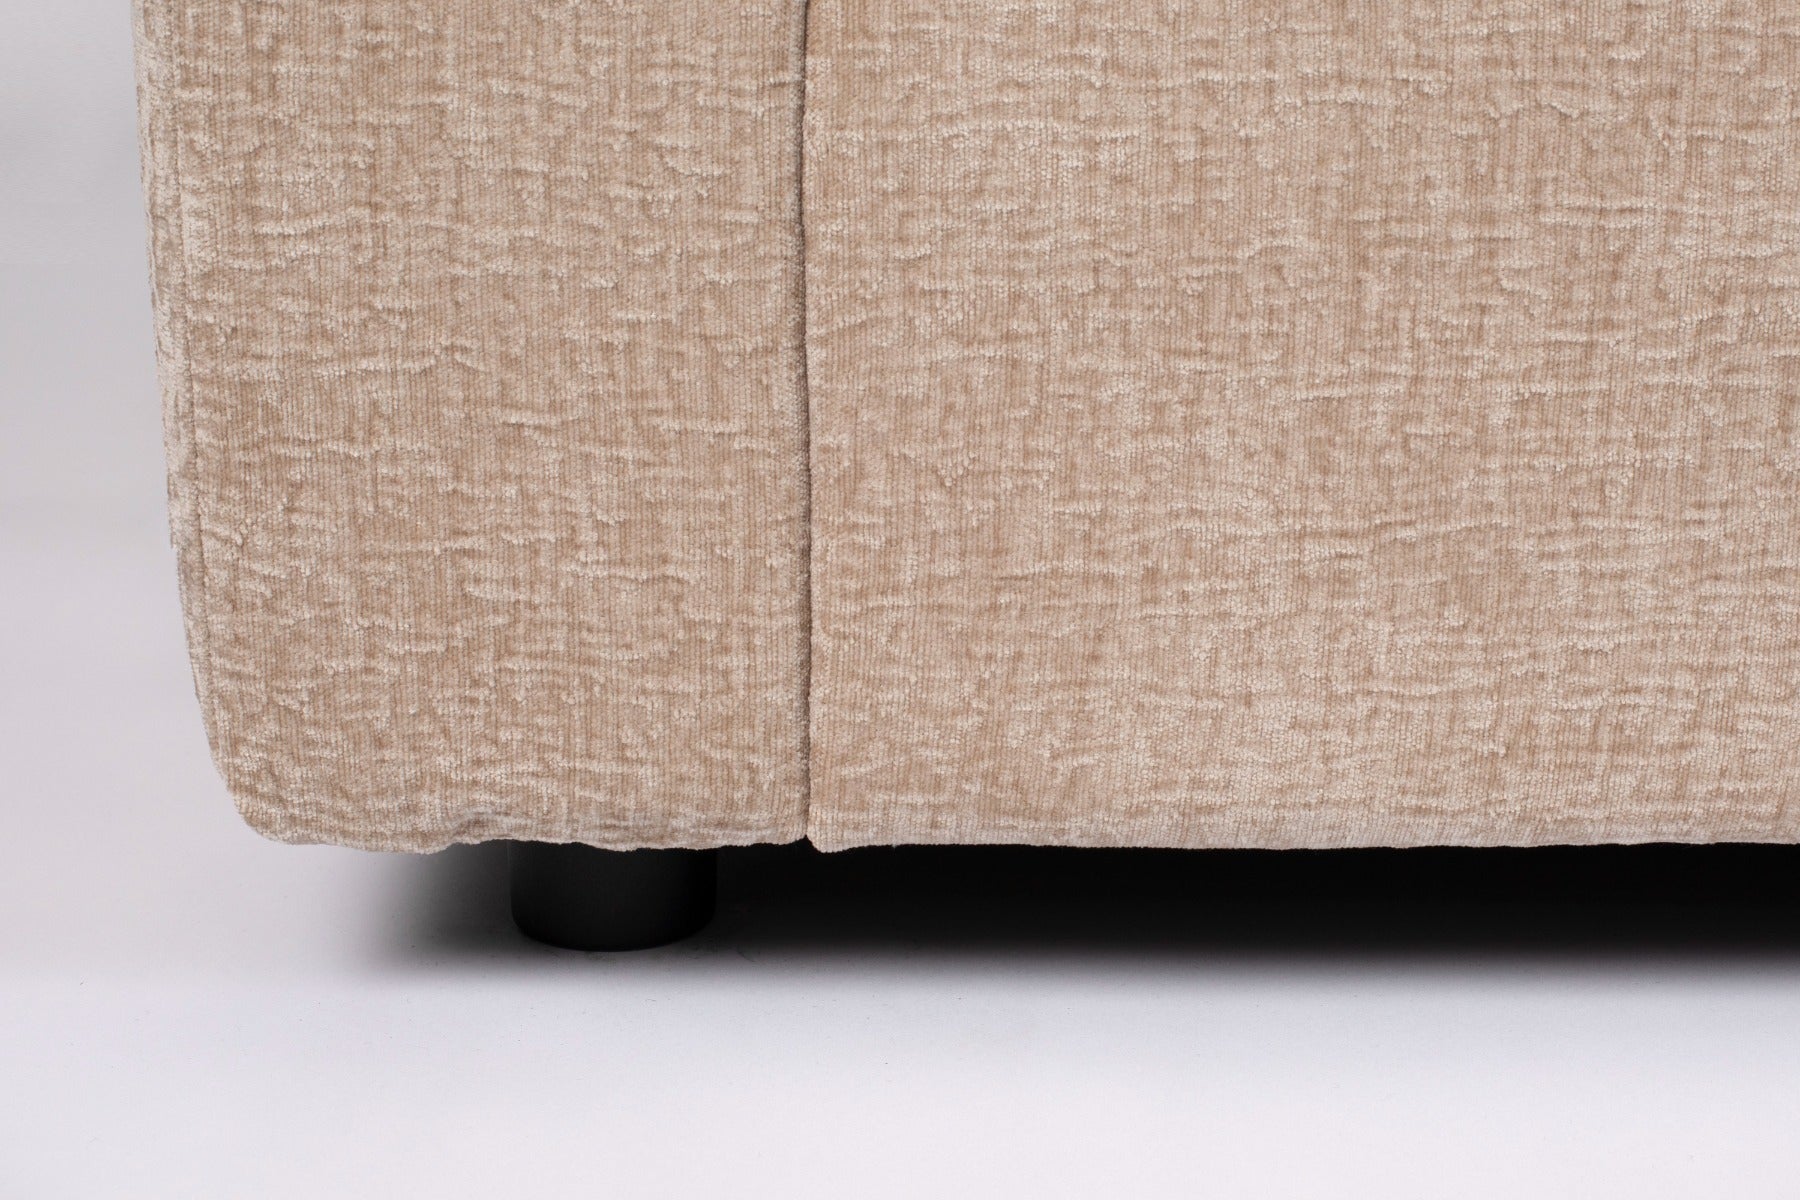 3-seater sofa SENSE beige, Zuiver, Eye on Design